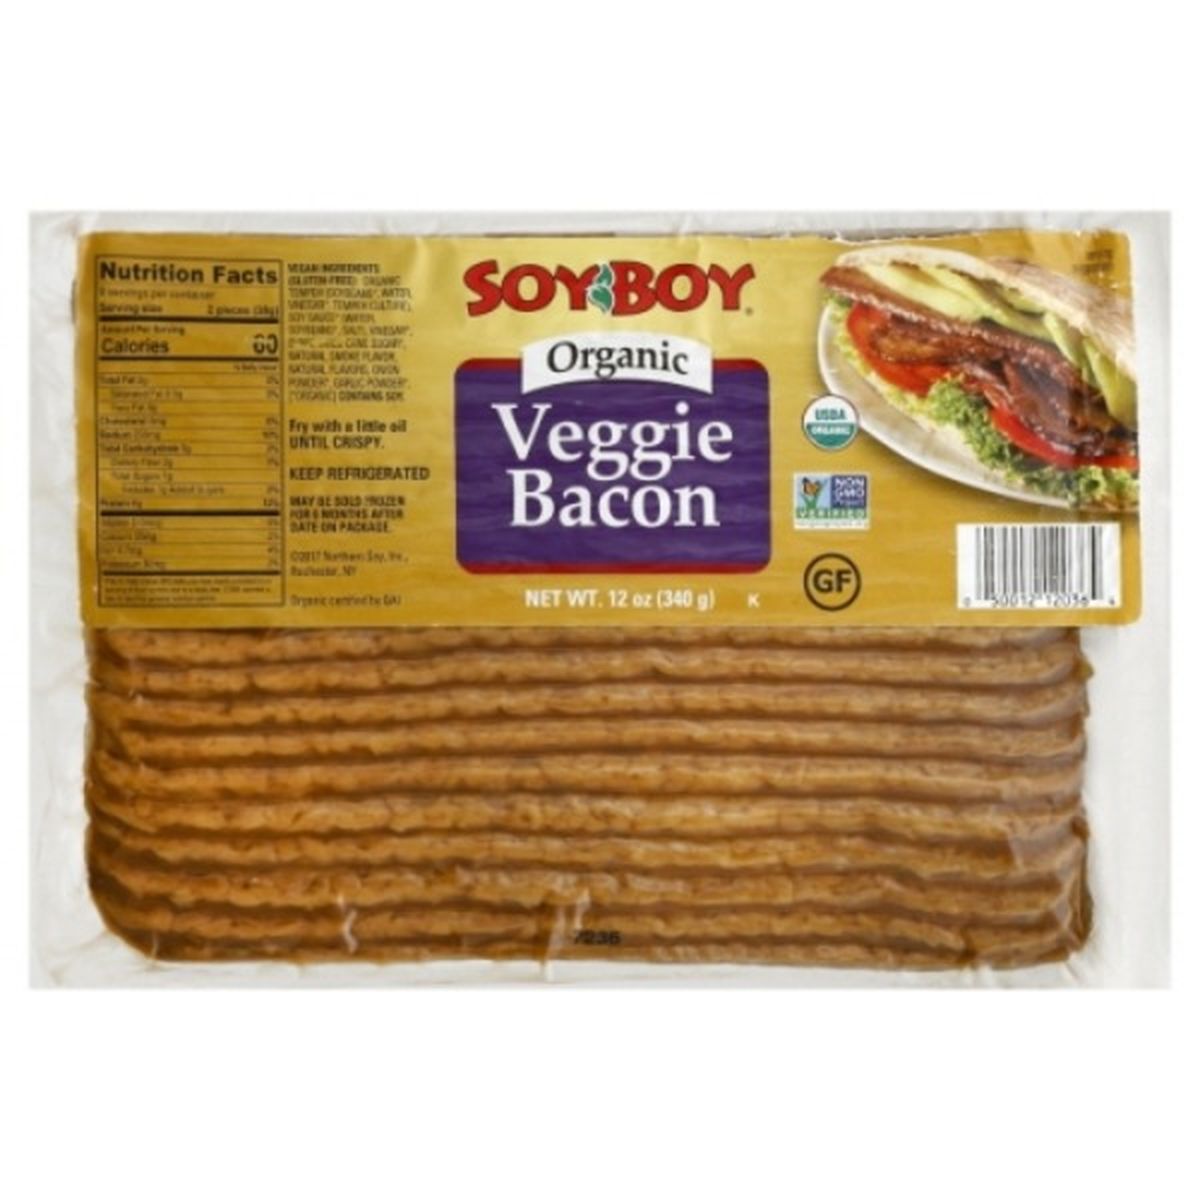 Calories in Soyboy Veggie Bacon, Organic